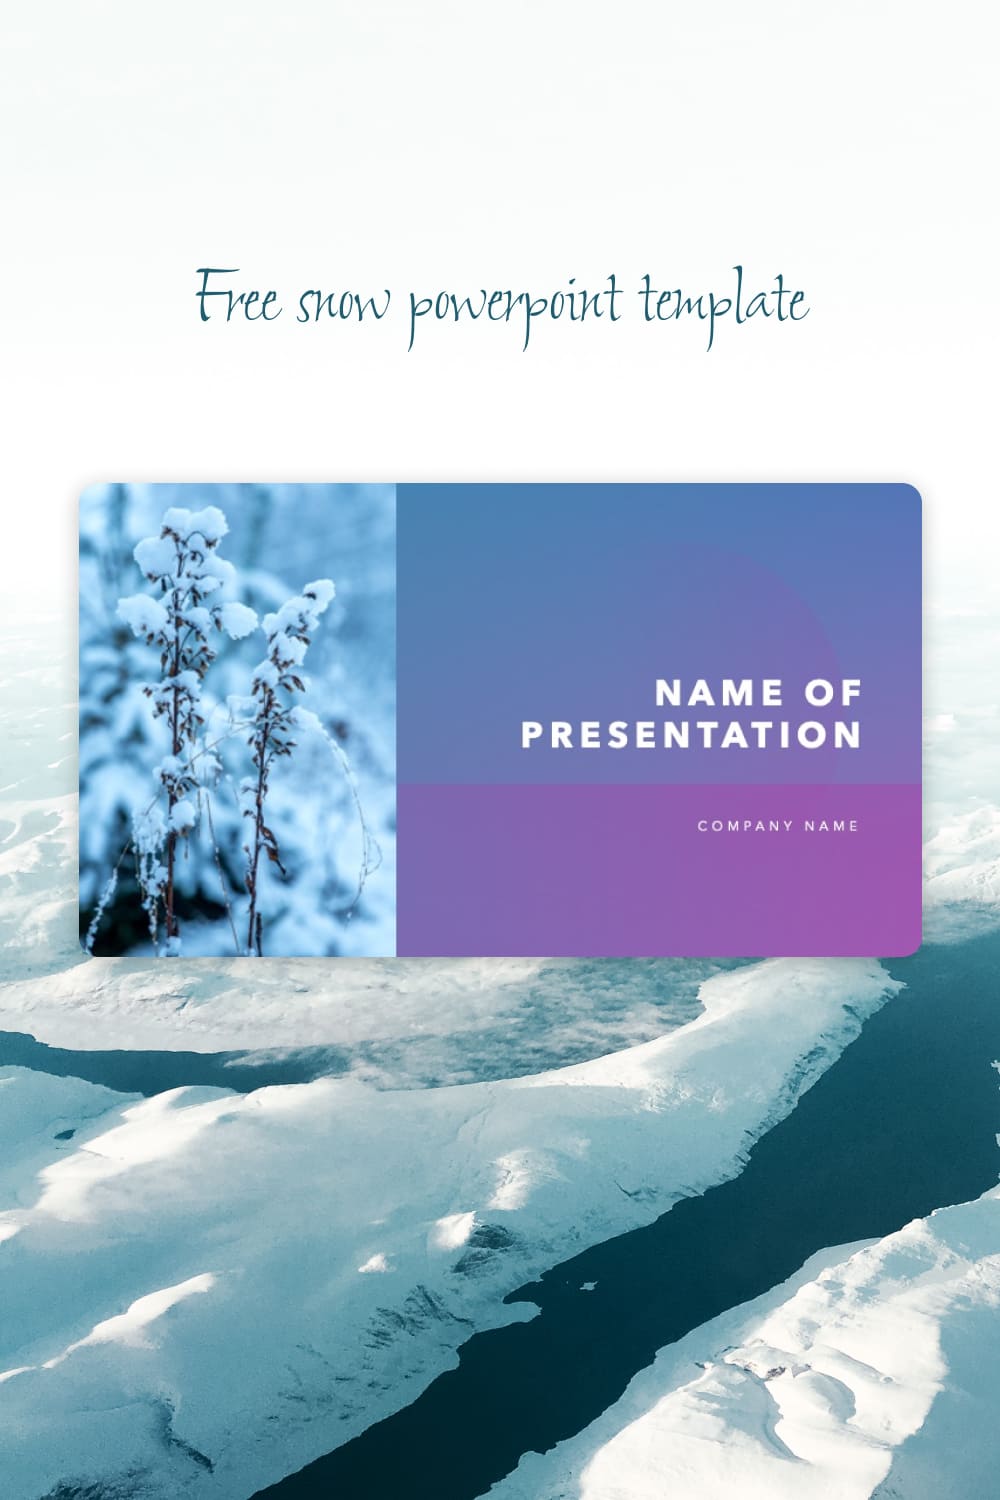 Pinterest Free Snow Powerpoin Template.